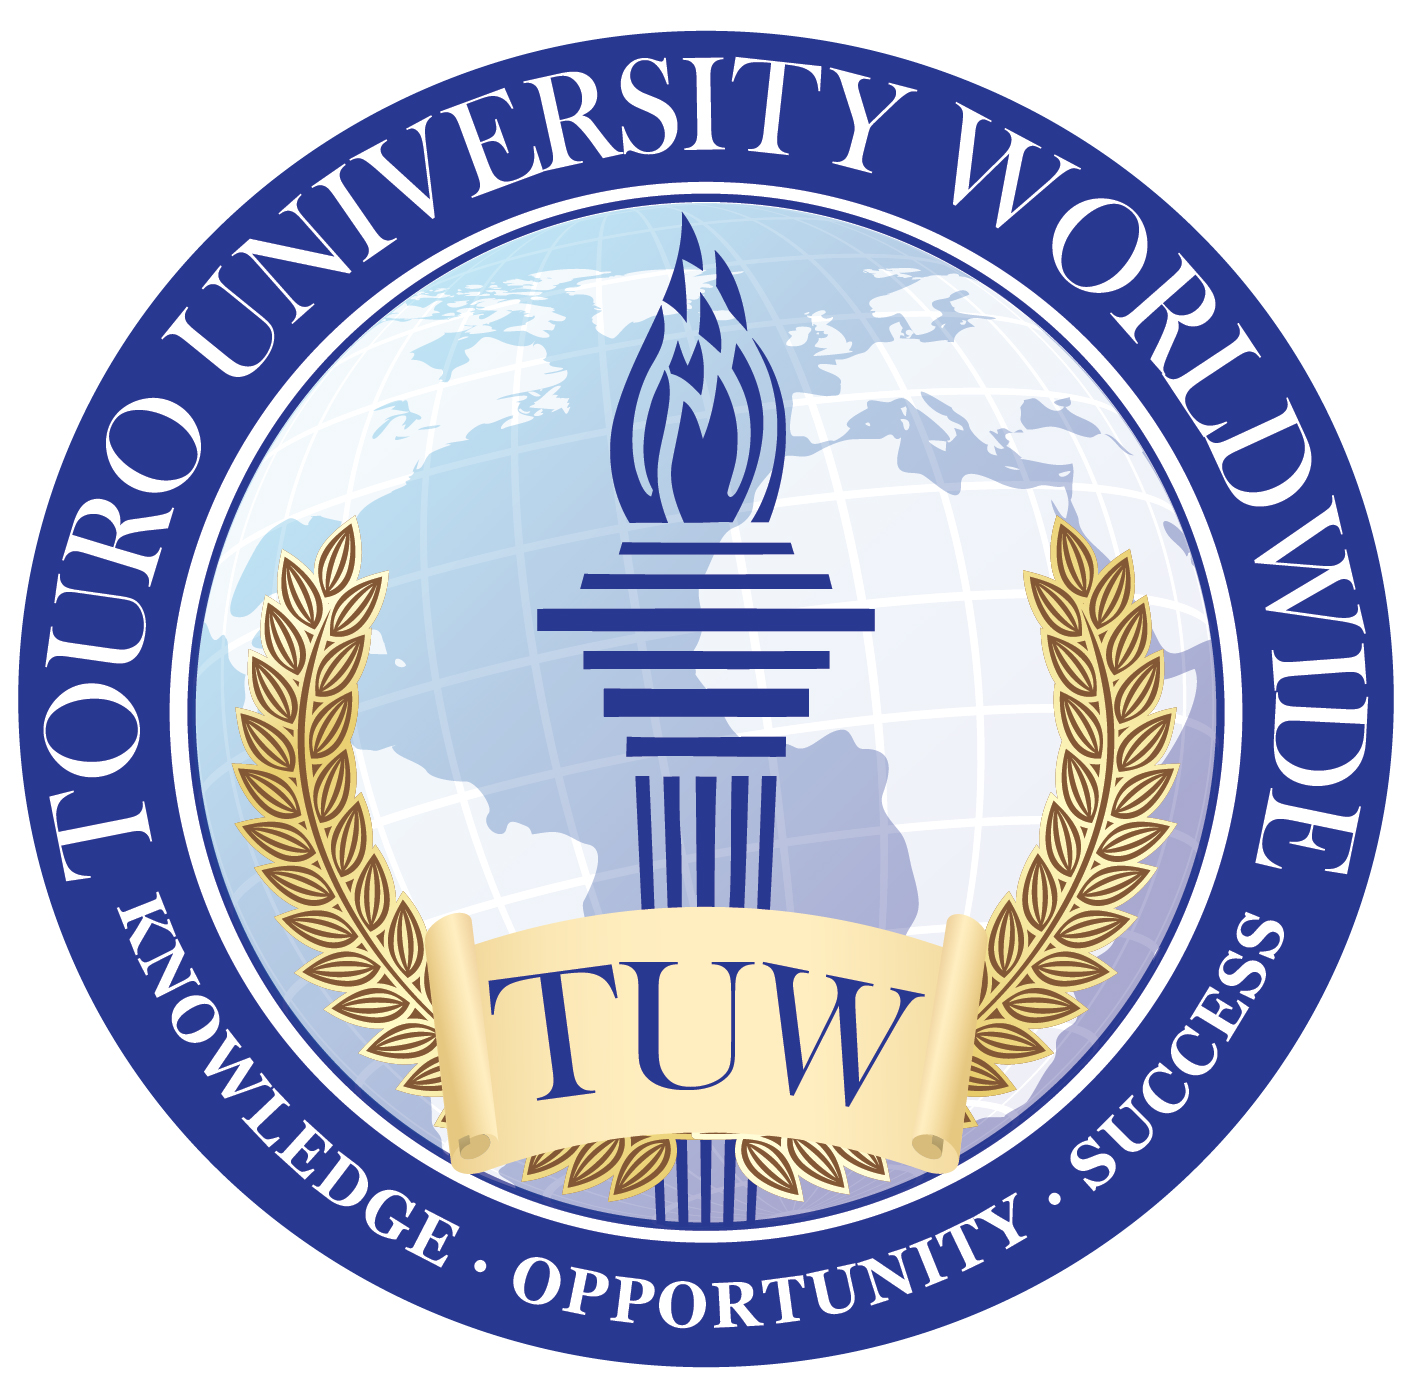 Bachelor of Arts in Social Work Program at Touro University Worldwide